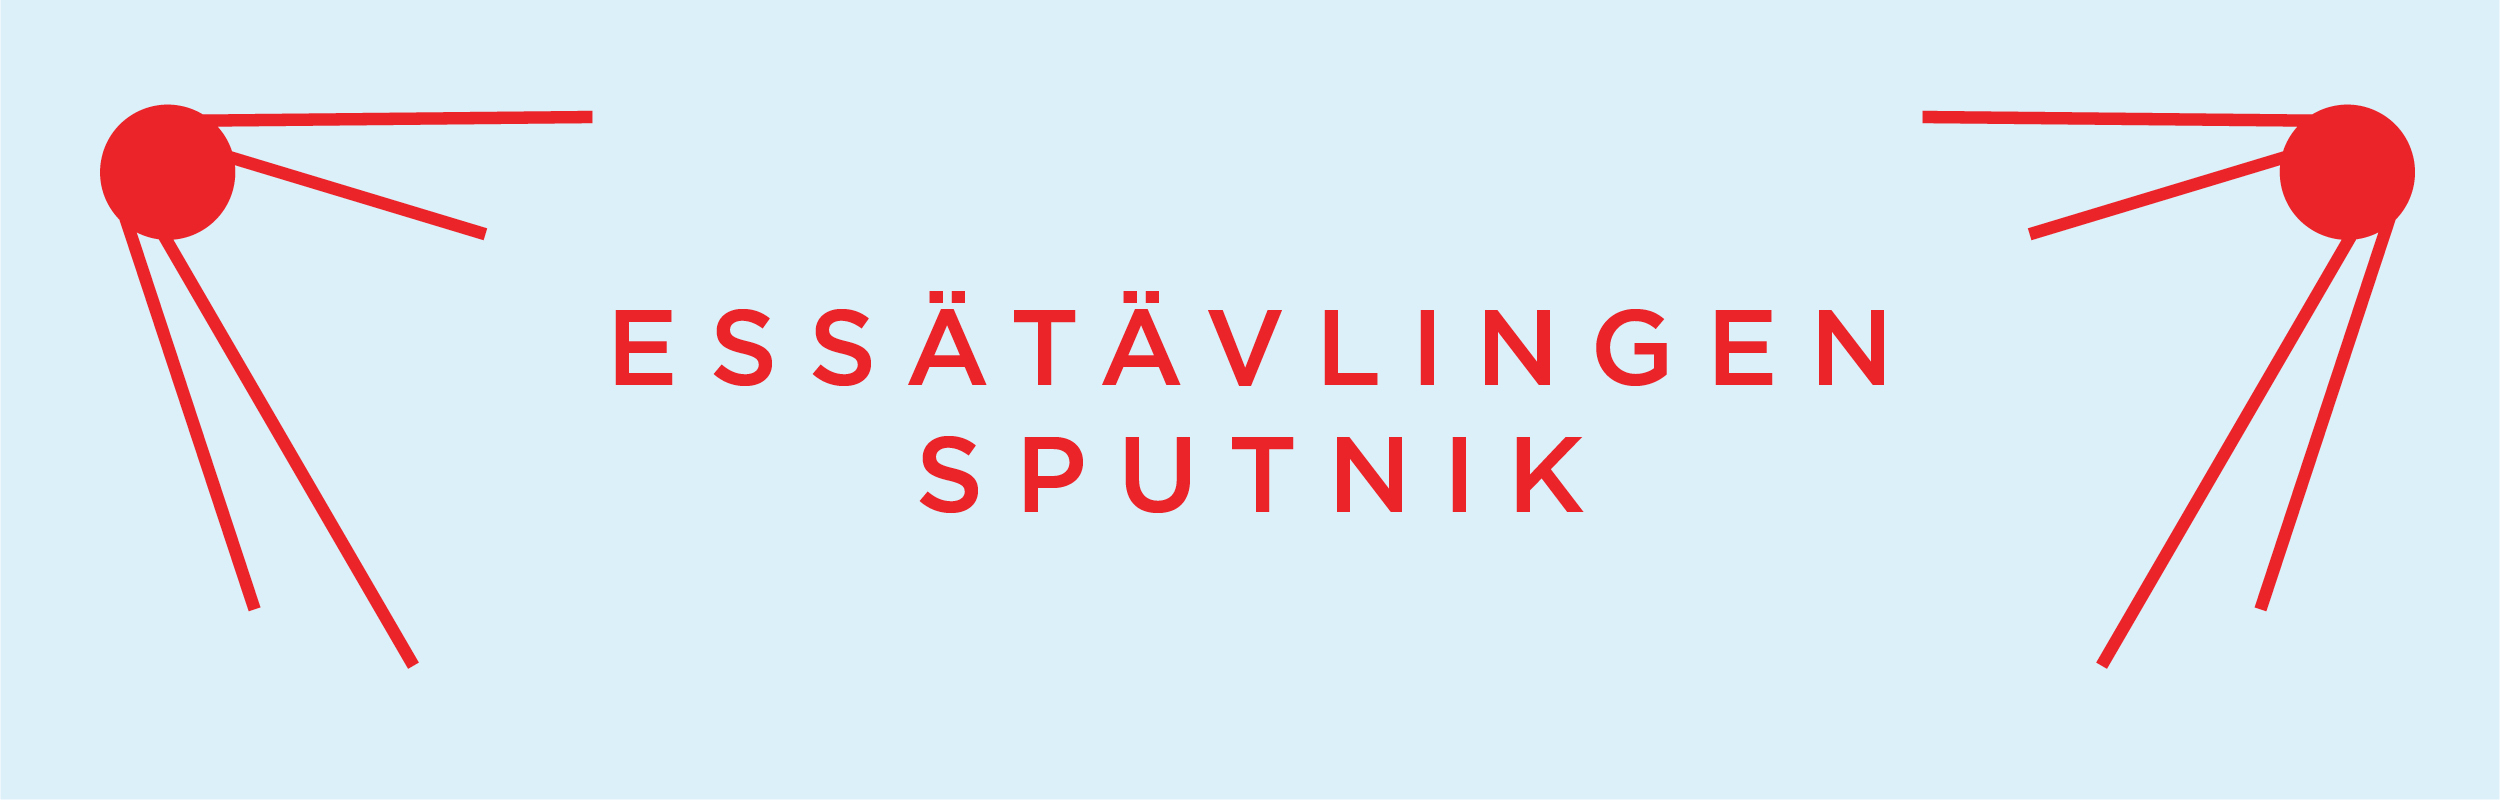 Essätävlingen Sputnik startar!